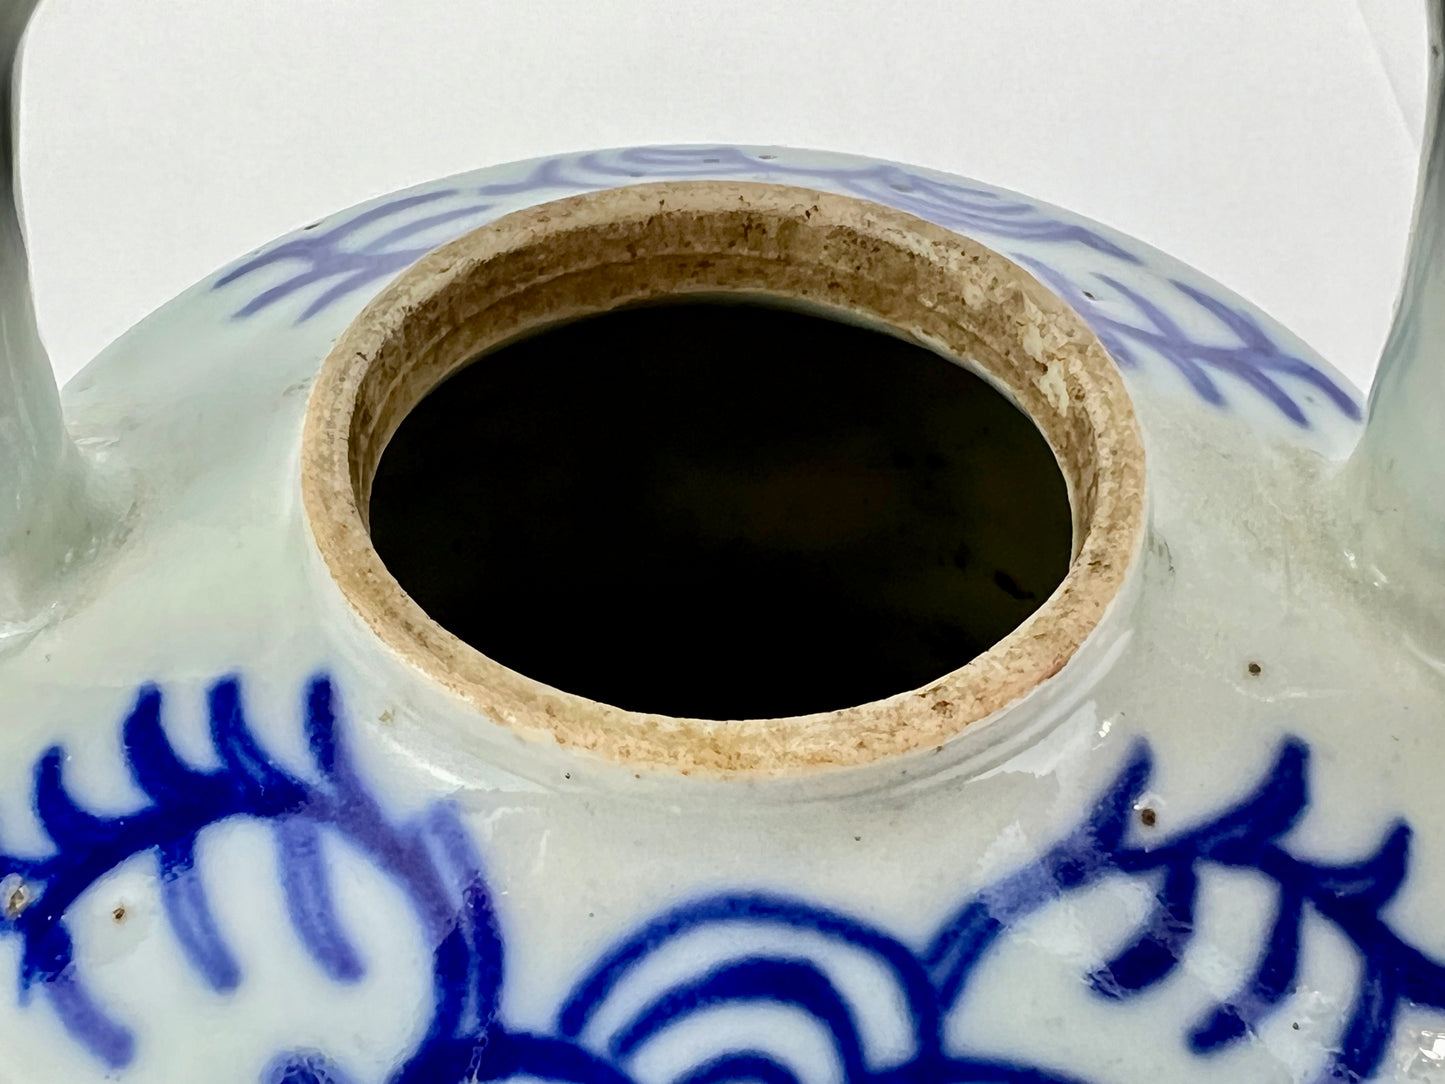 Antique Chinese c1920 Bridge Handle Tea Pot Cobalt Blue & White Hand Painted